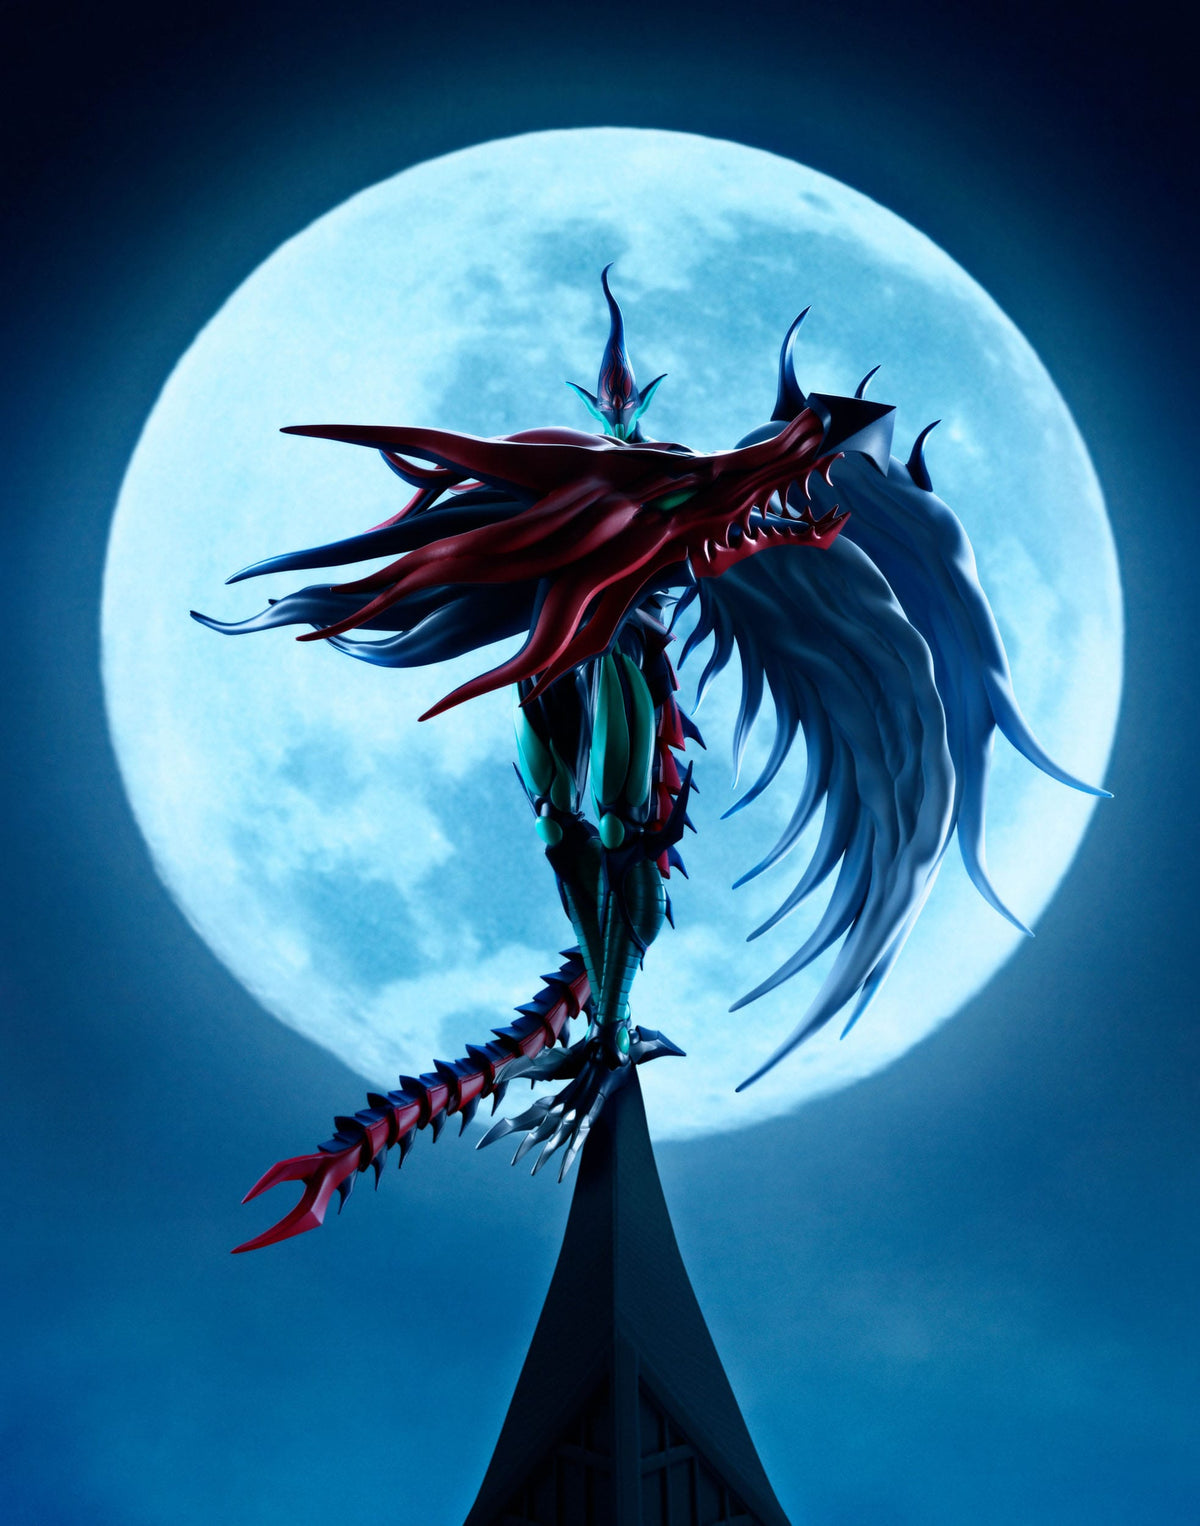 Yu-Gi-Oh! Duel Monsters - Elemental Hero Flame Wingman - S.H. Monsterart's action figure (Bandai)